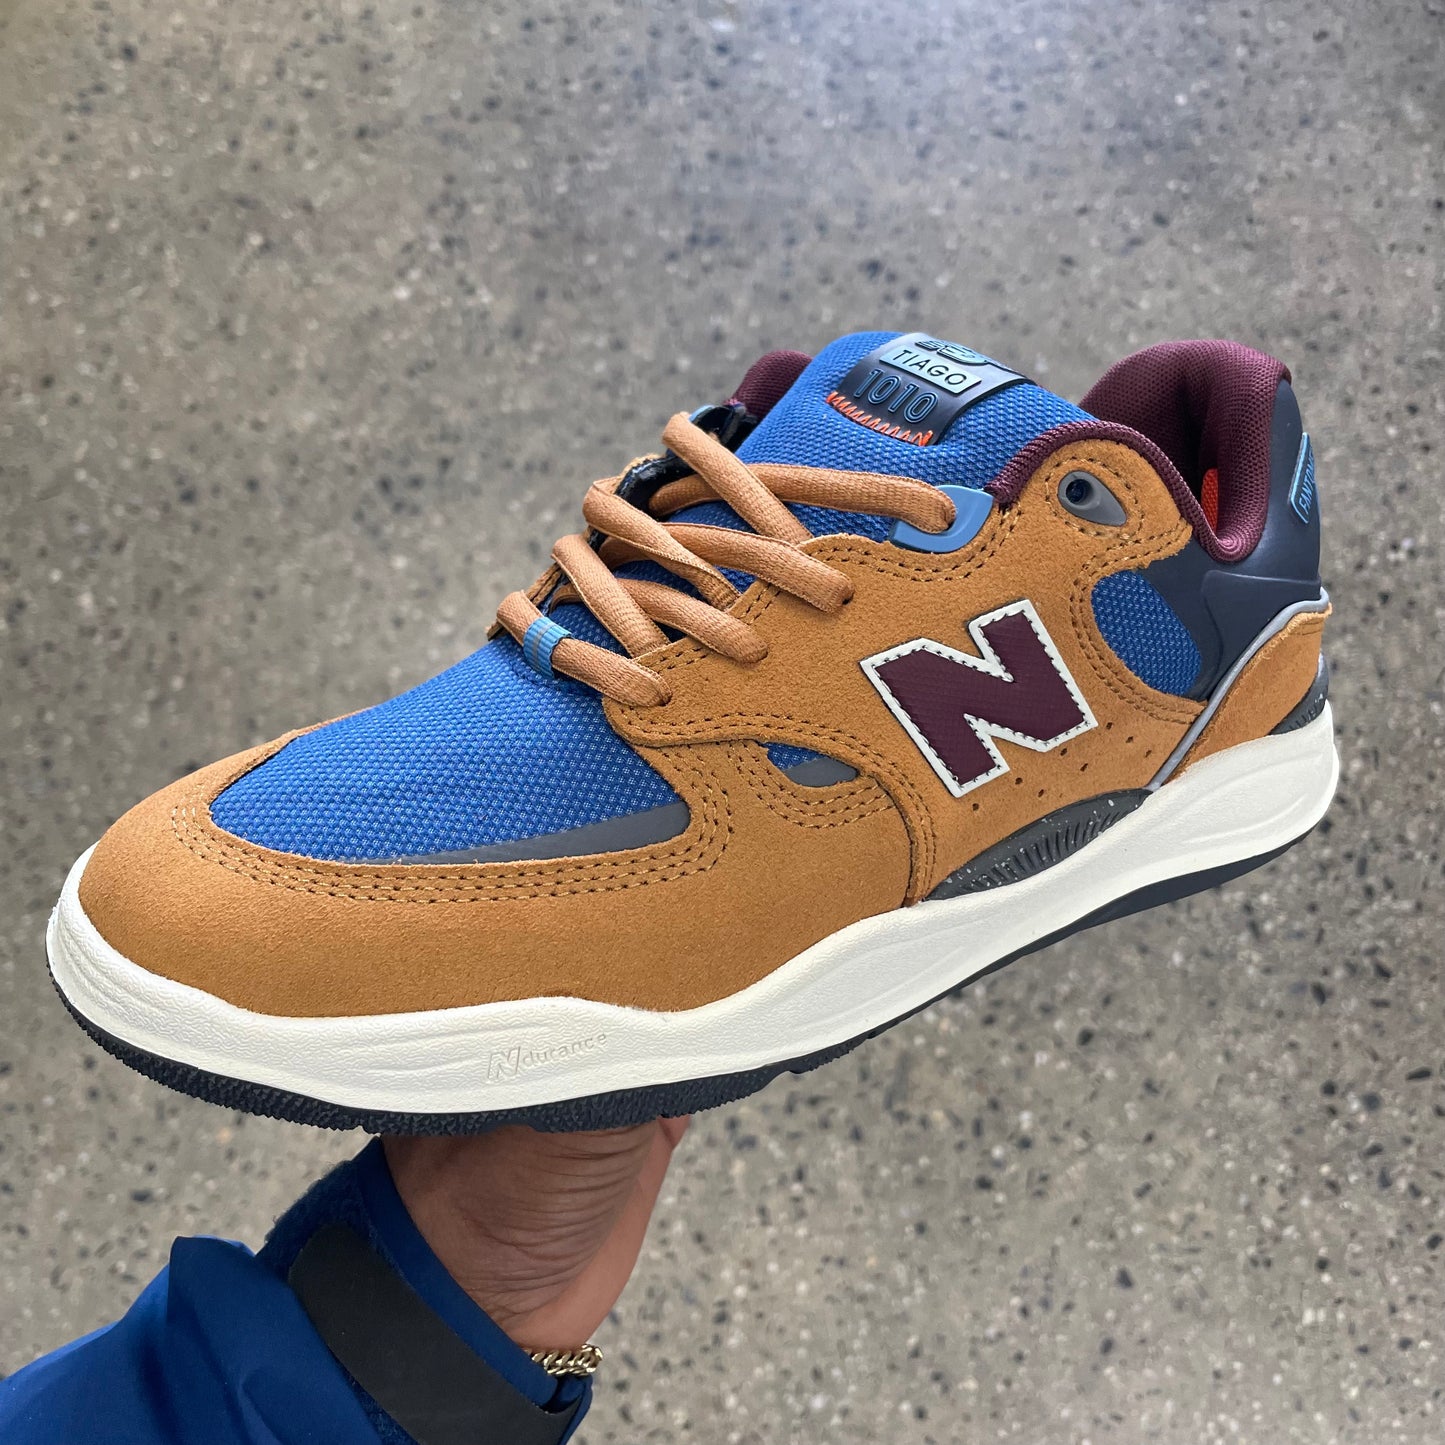 New Balance NM1010 - Brown/Blue